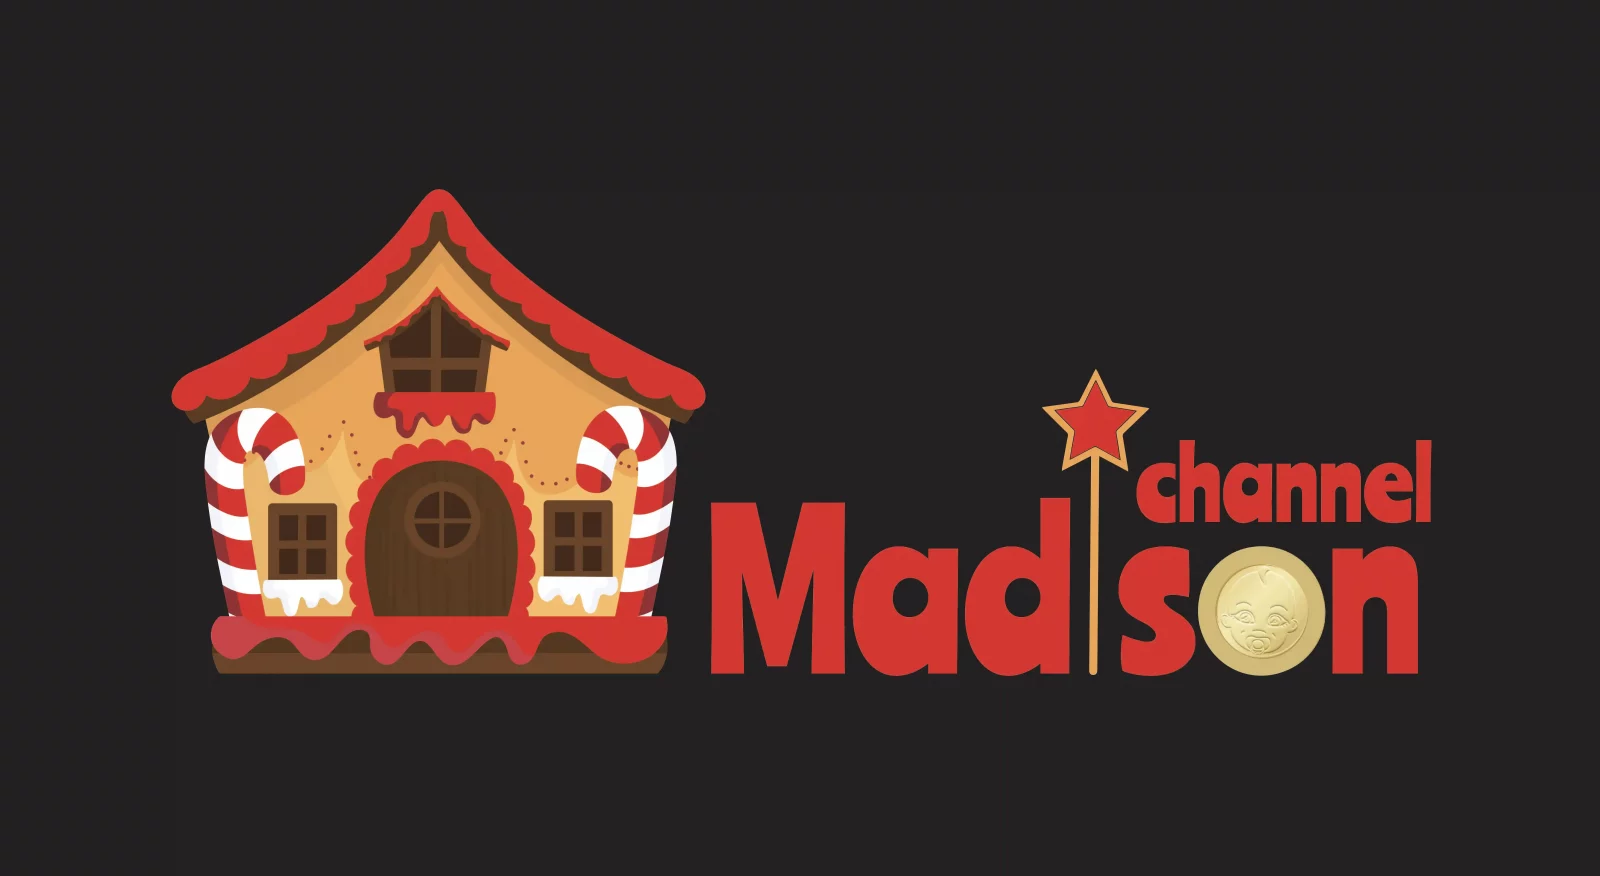 Madison Channel logo